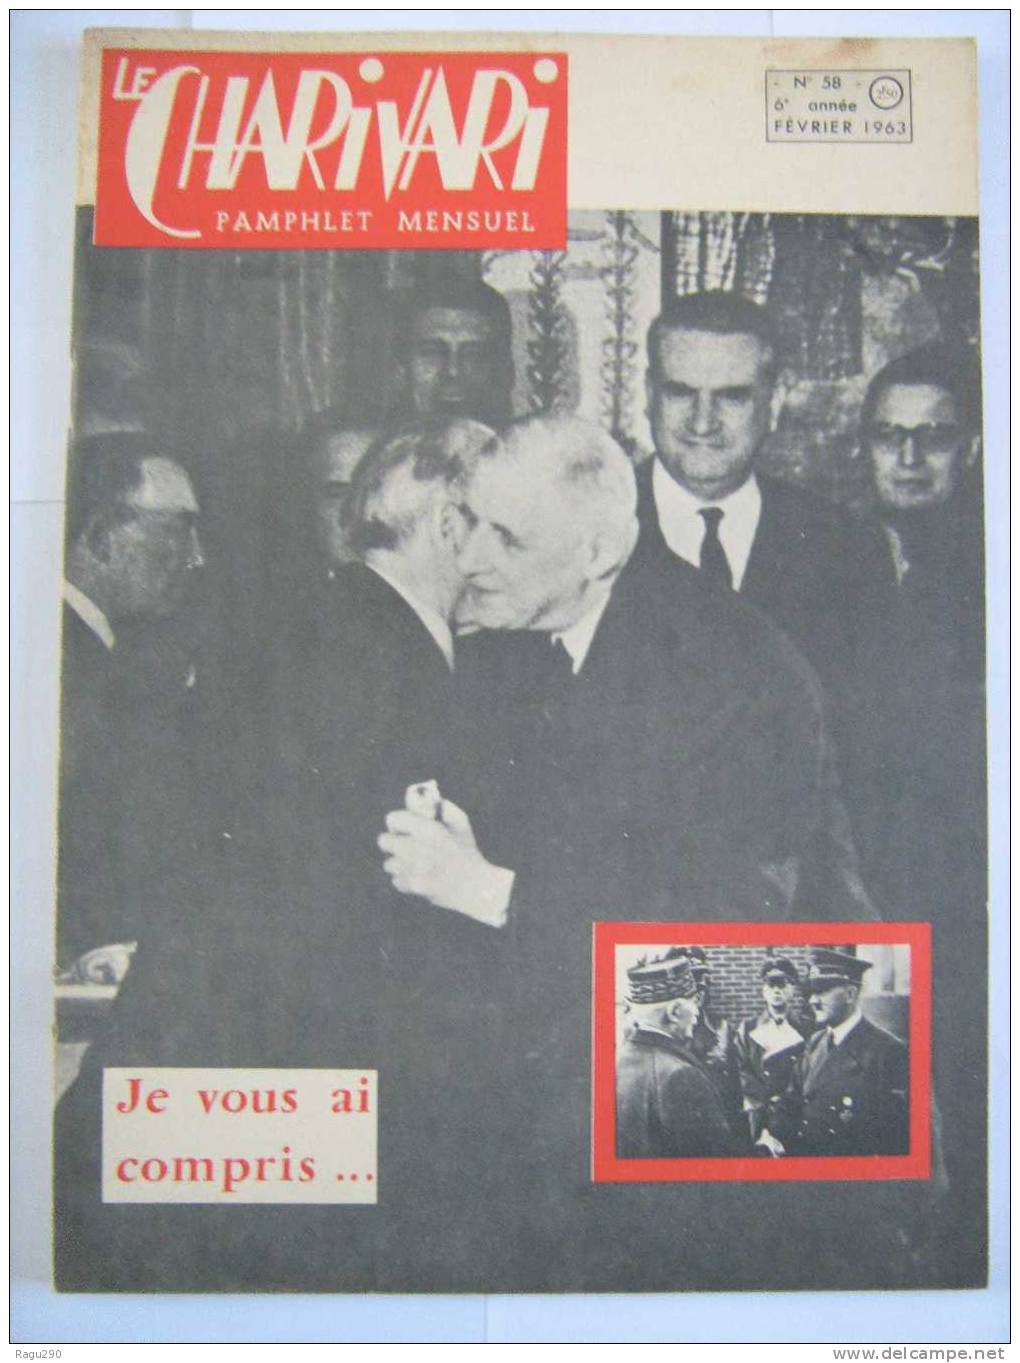 LE CHARIVARI   PAMPHLET MENSUEL  N° 58  Février 1963 - Política